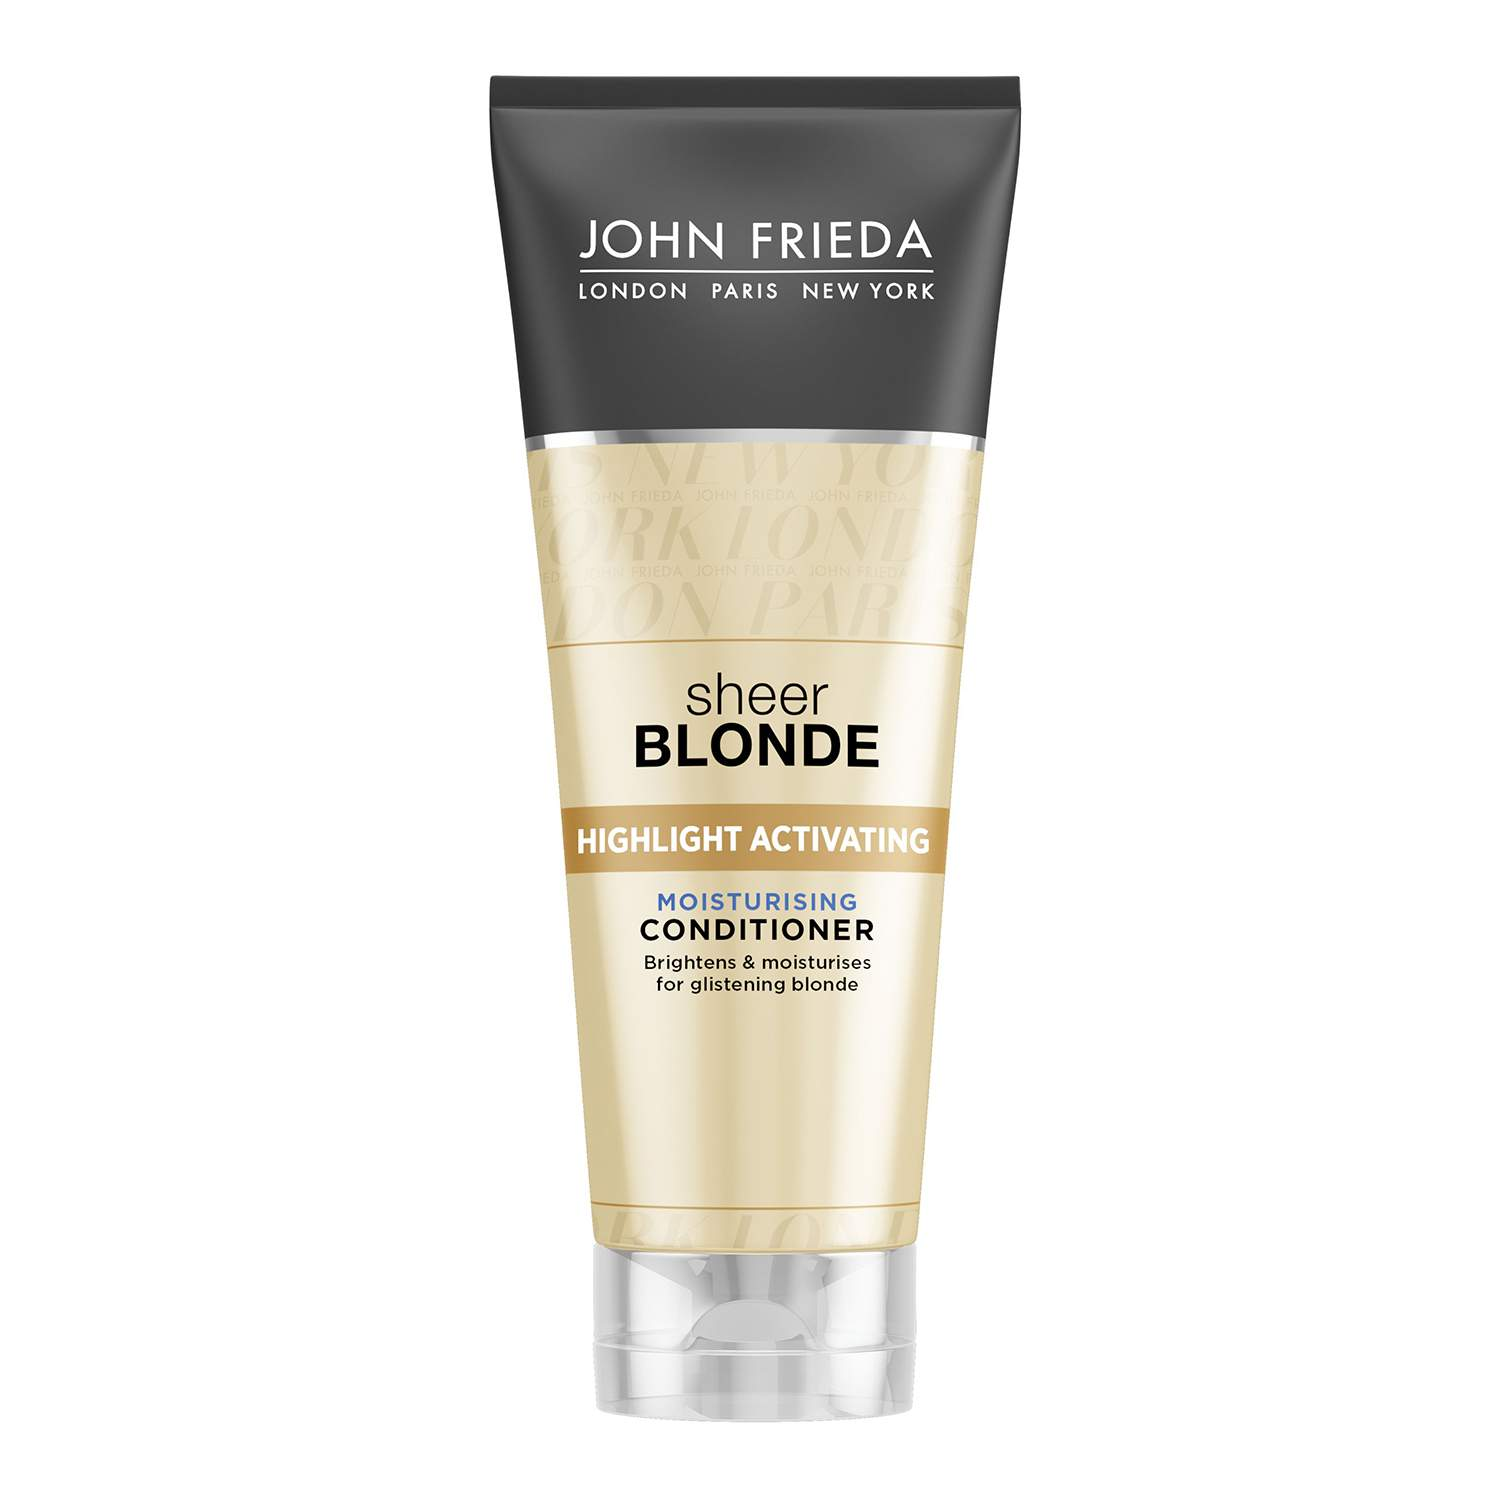 John Frieda Sheer Blonde Highlight Activating Moisturising Conditioner John Frieda Sheer Blonde Highlight Activating Moisturising Conditioner 1